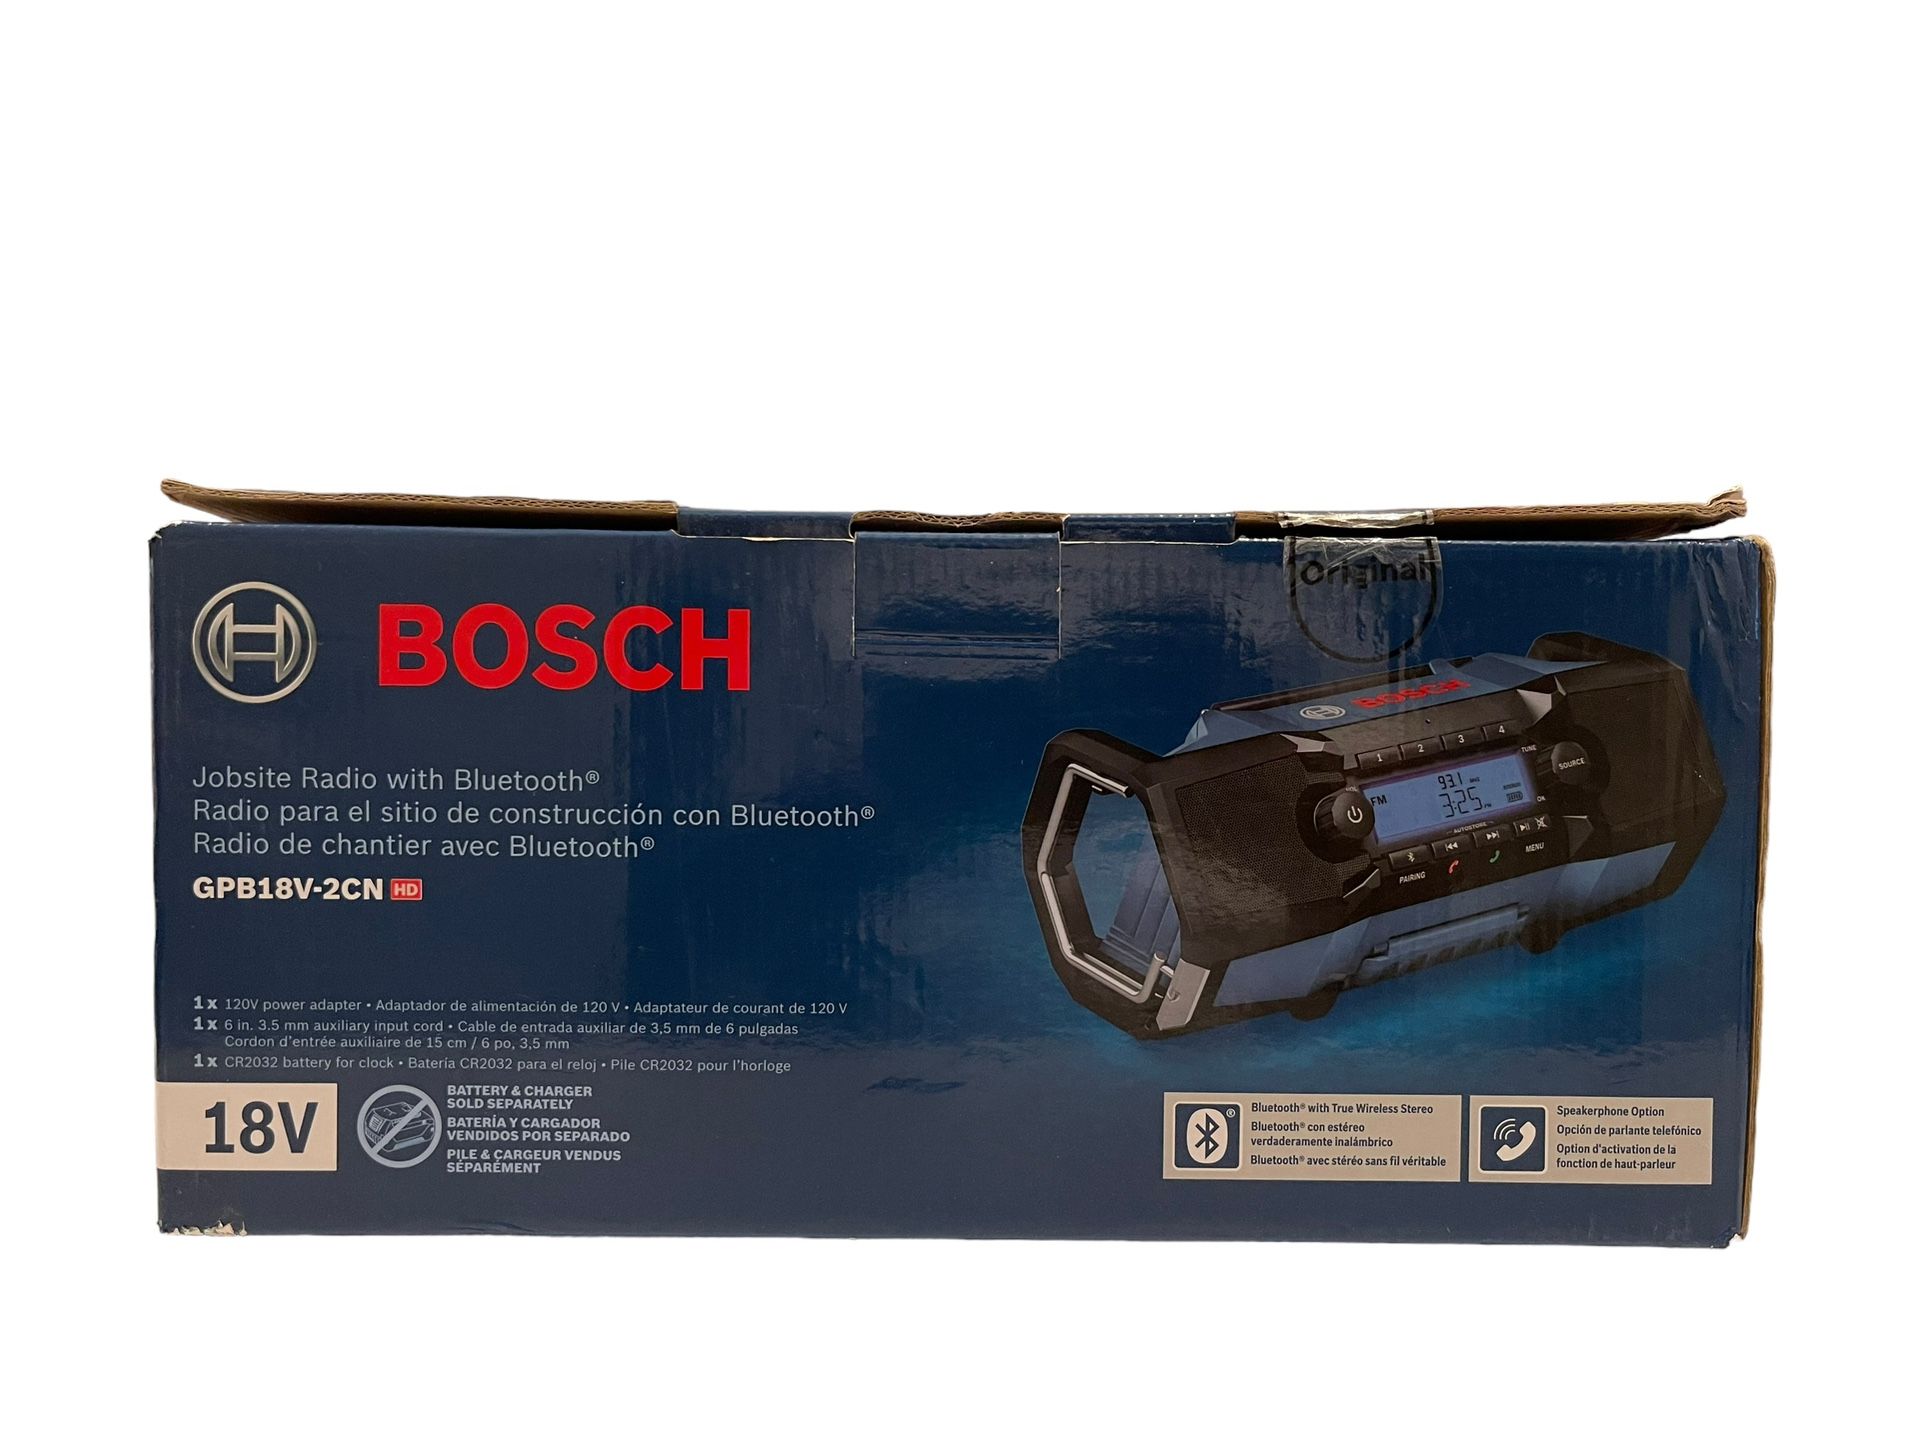 New Bosch Jobsite Radio With Bluetooth 